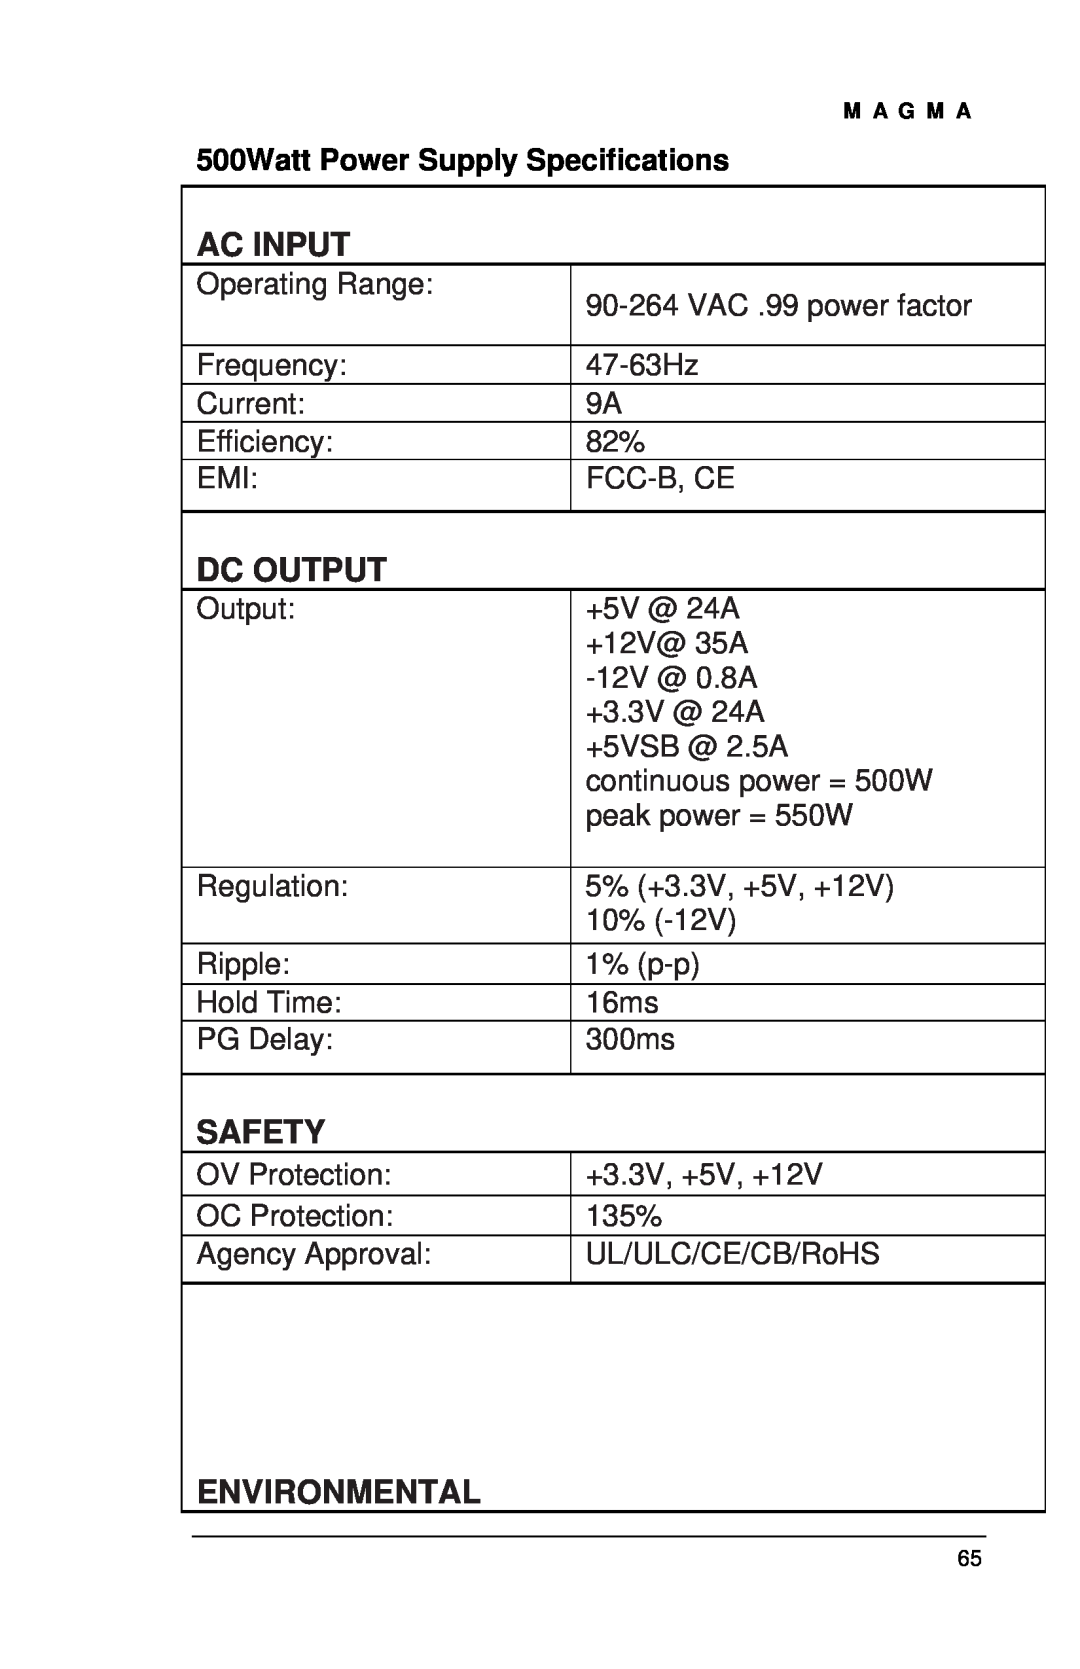 Magma EB7R-x8, EBU, EB7-x8 user manual Ac Input, Dc Output, Safety, Environmental, 500Watt Power Supply Specifications 